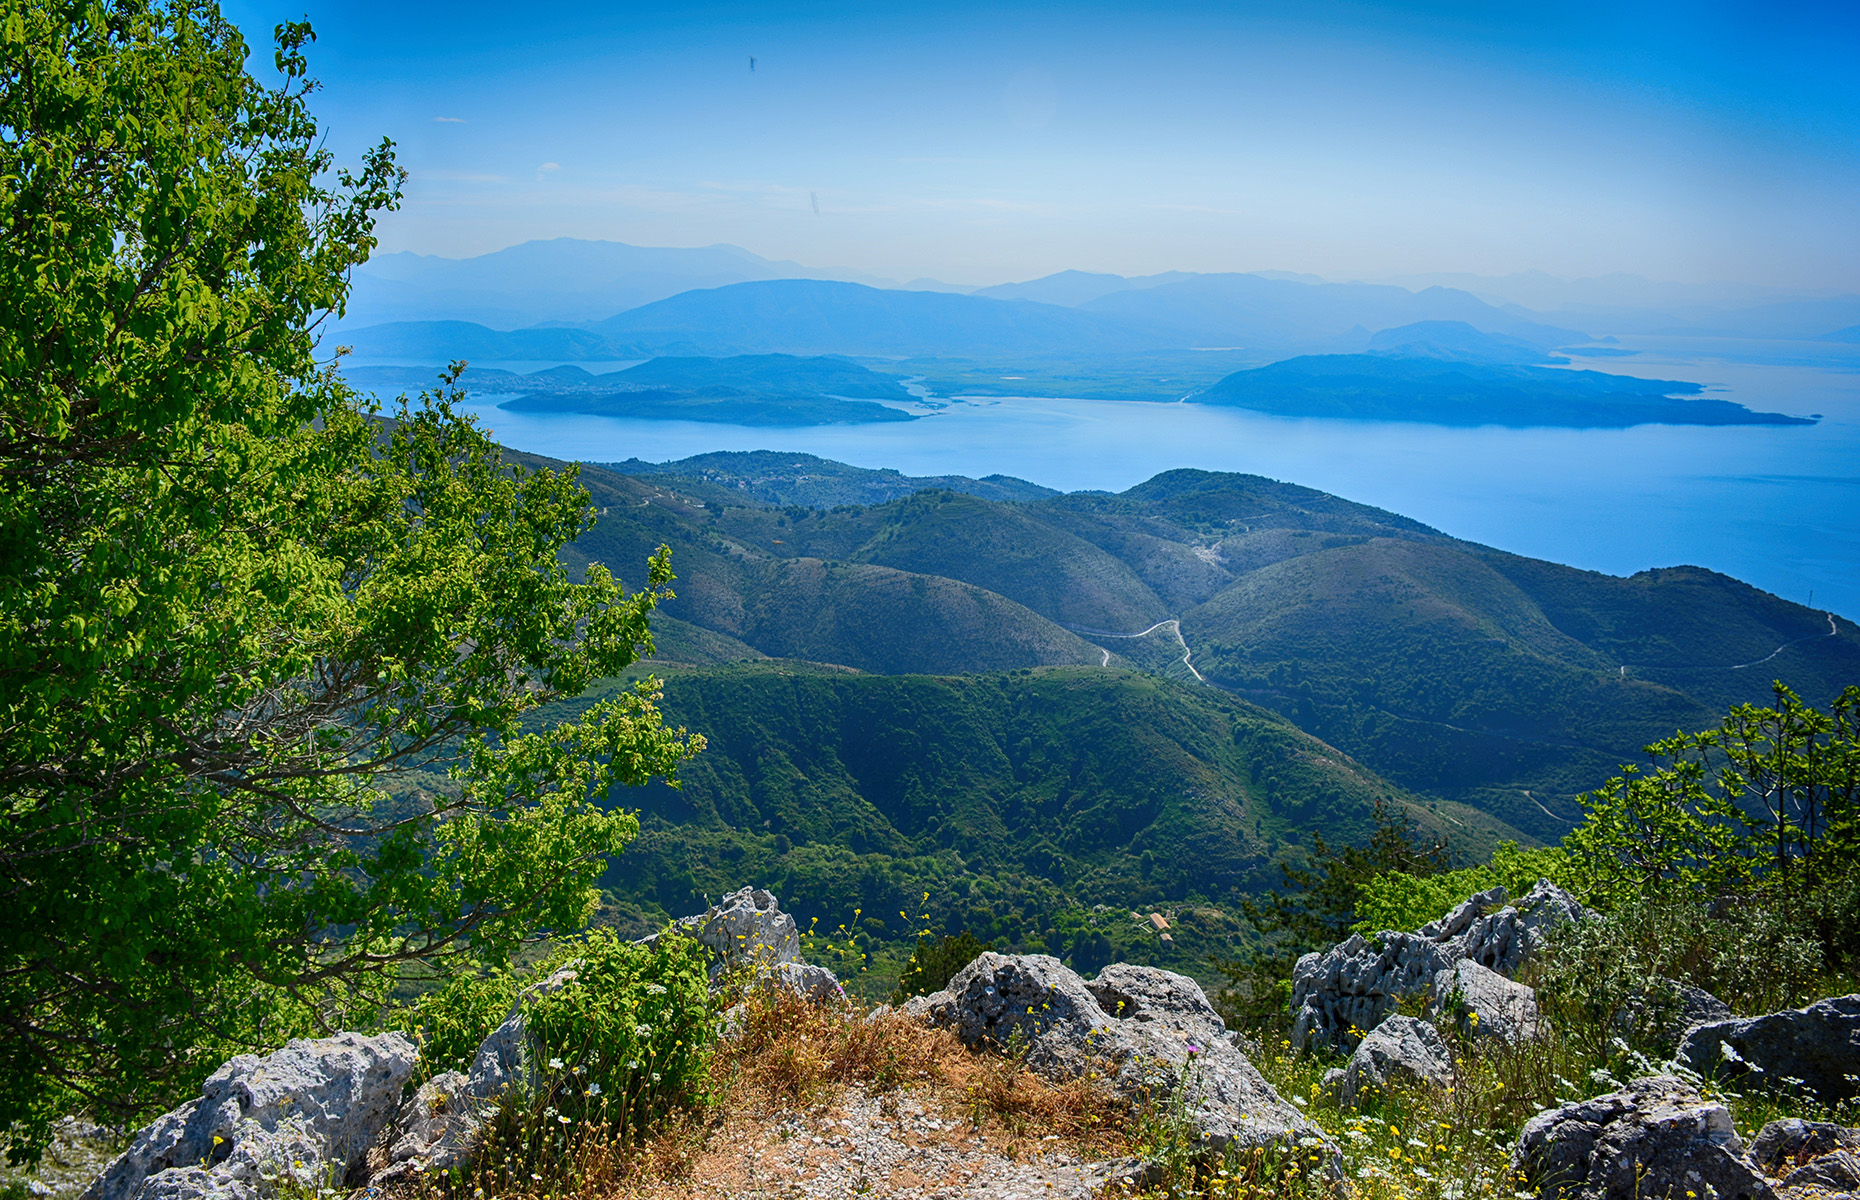 Mount Pantokrator, Corfu, Greece. (Image: PawelKusek/Shutterstock)